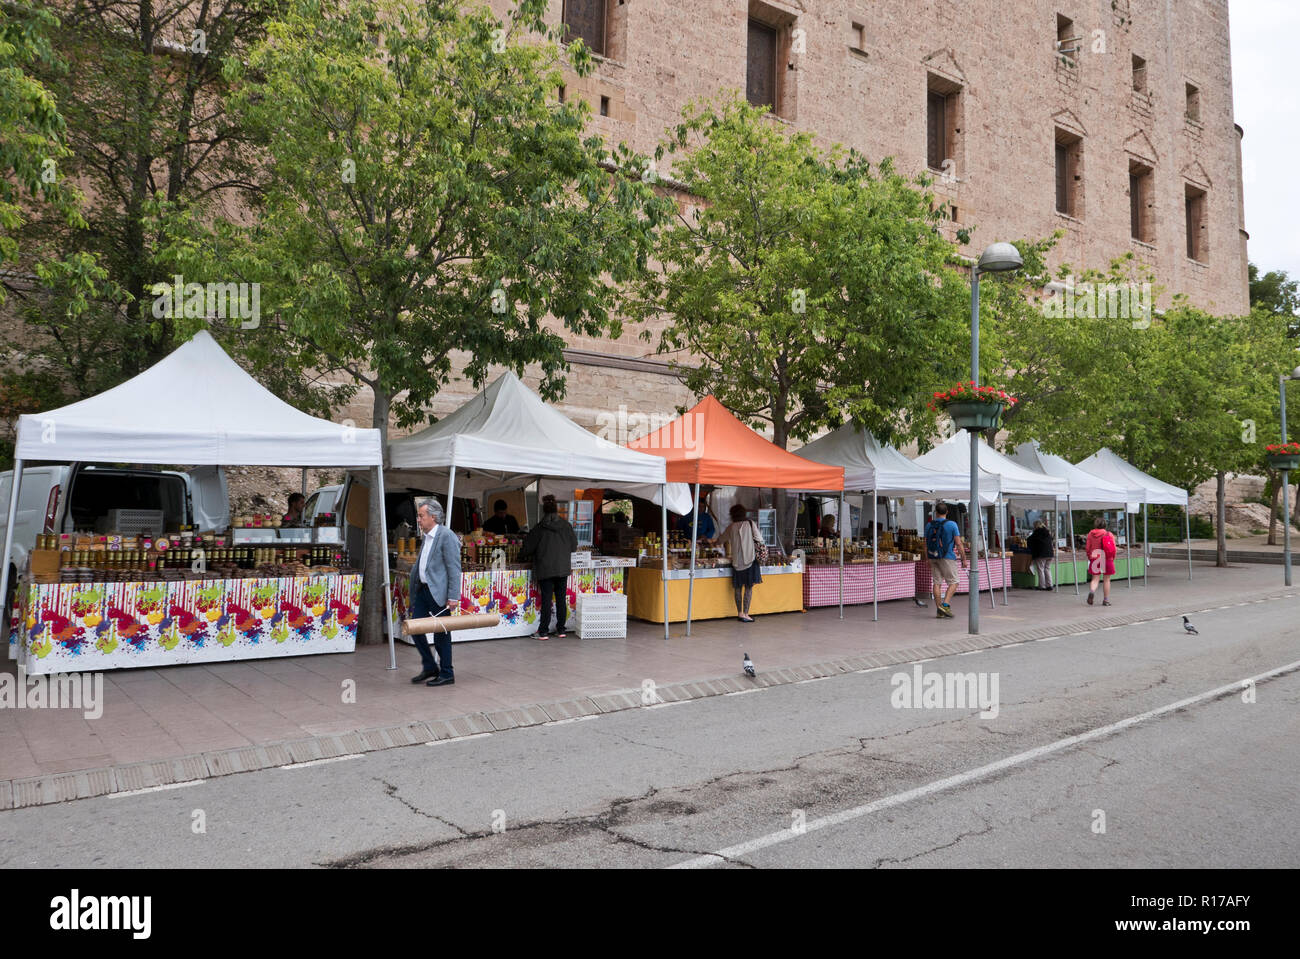 Stalls selling local produce outside the walls of the Montserrat Monastery, Monserrat, Barcelona, Spain Stock Photo